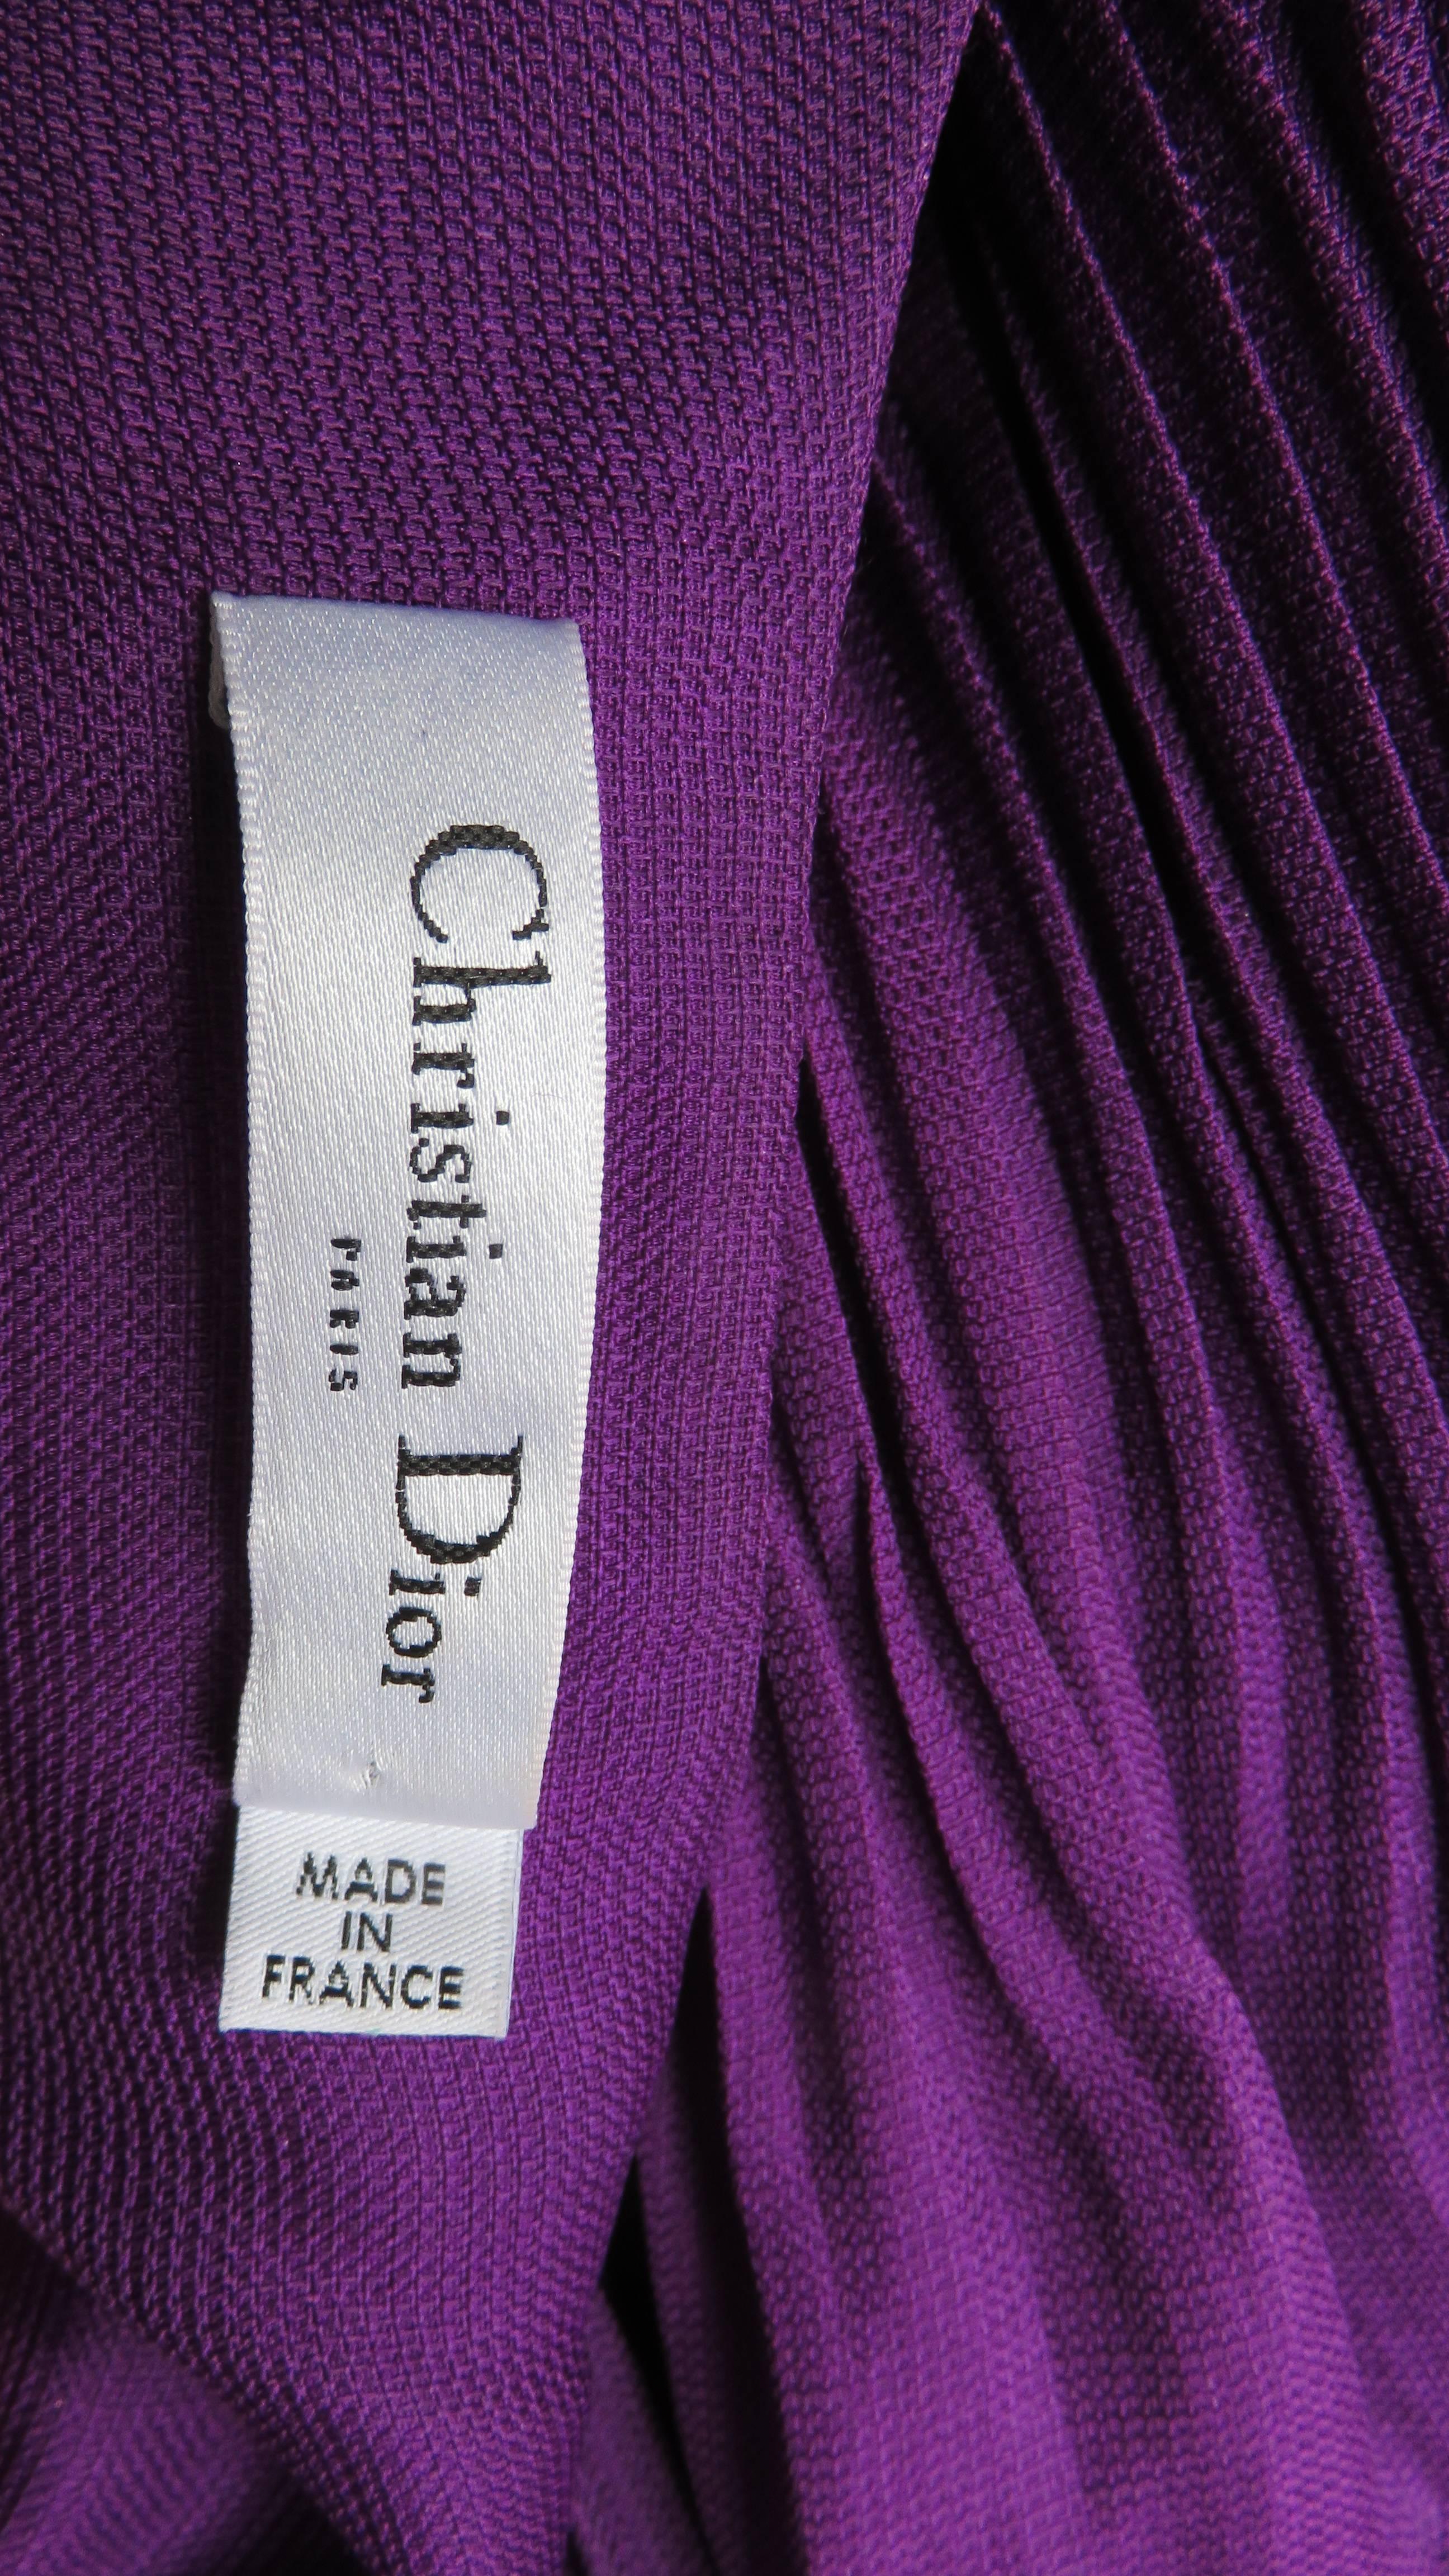 John Galliano for Christian Dior S/S 2009 Silk Halter Dress For Sale 9